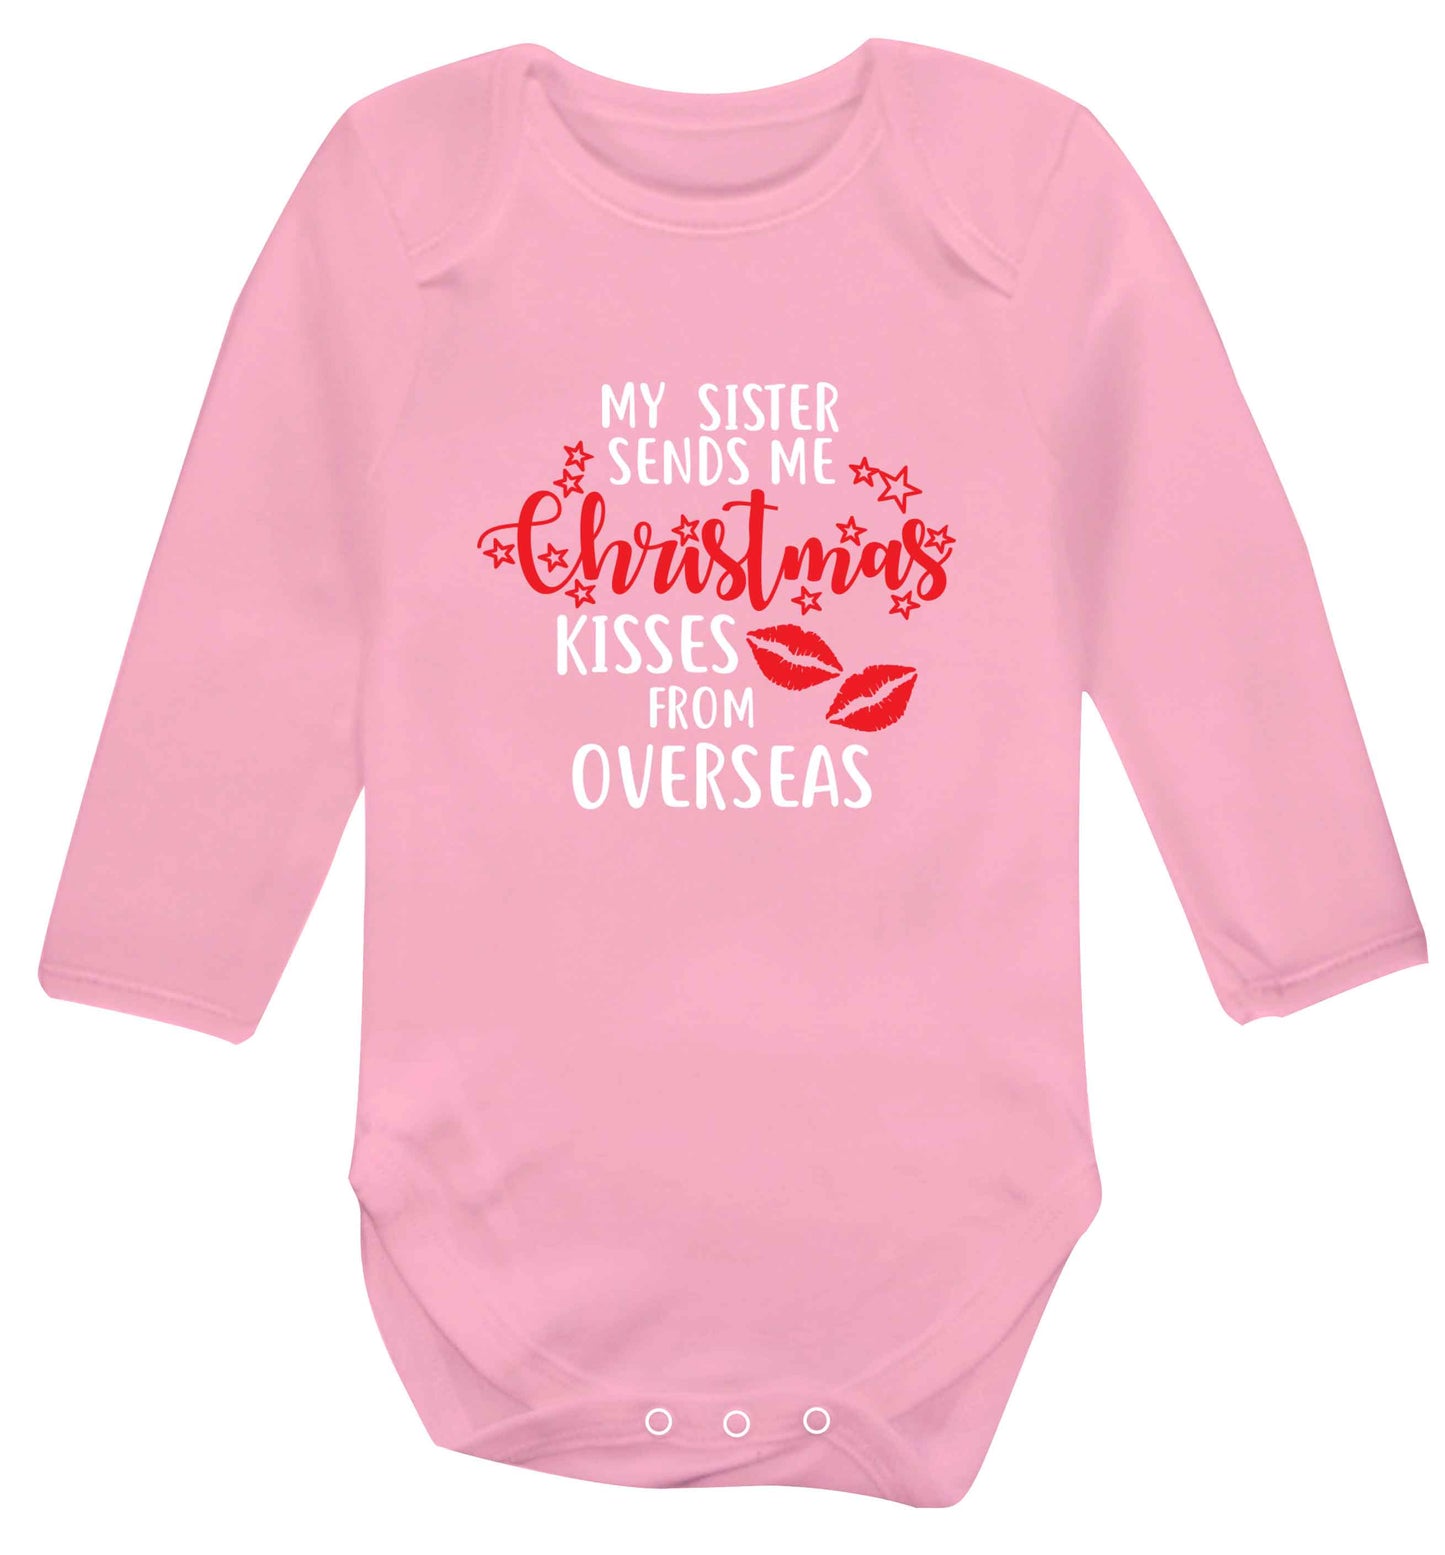 Grandad Christmas Kisses Overseas baby vest long sleeved pale pink 6-12 months